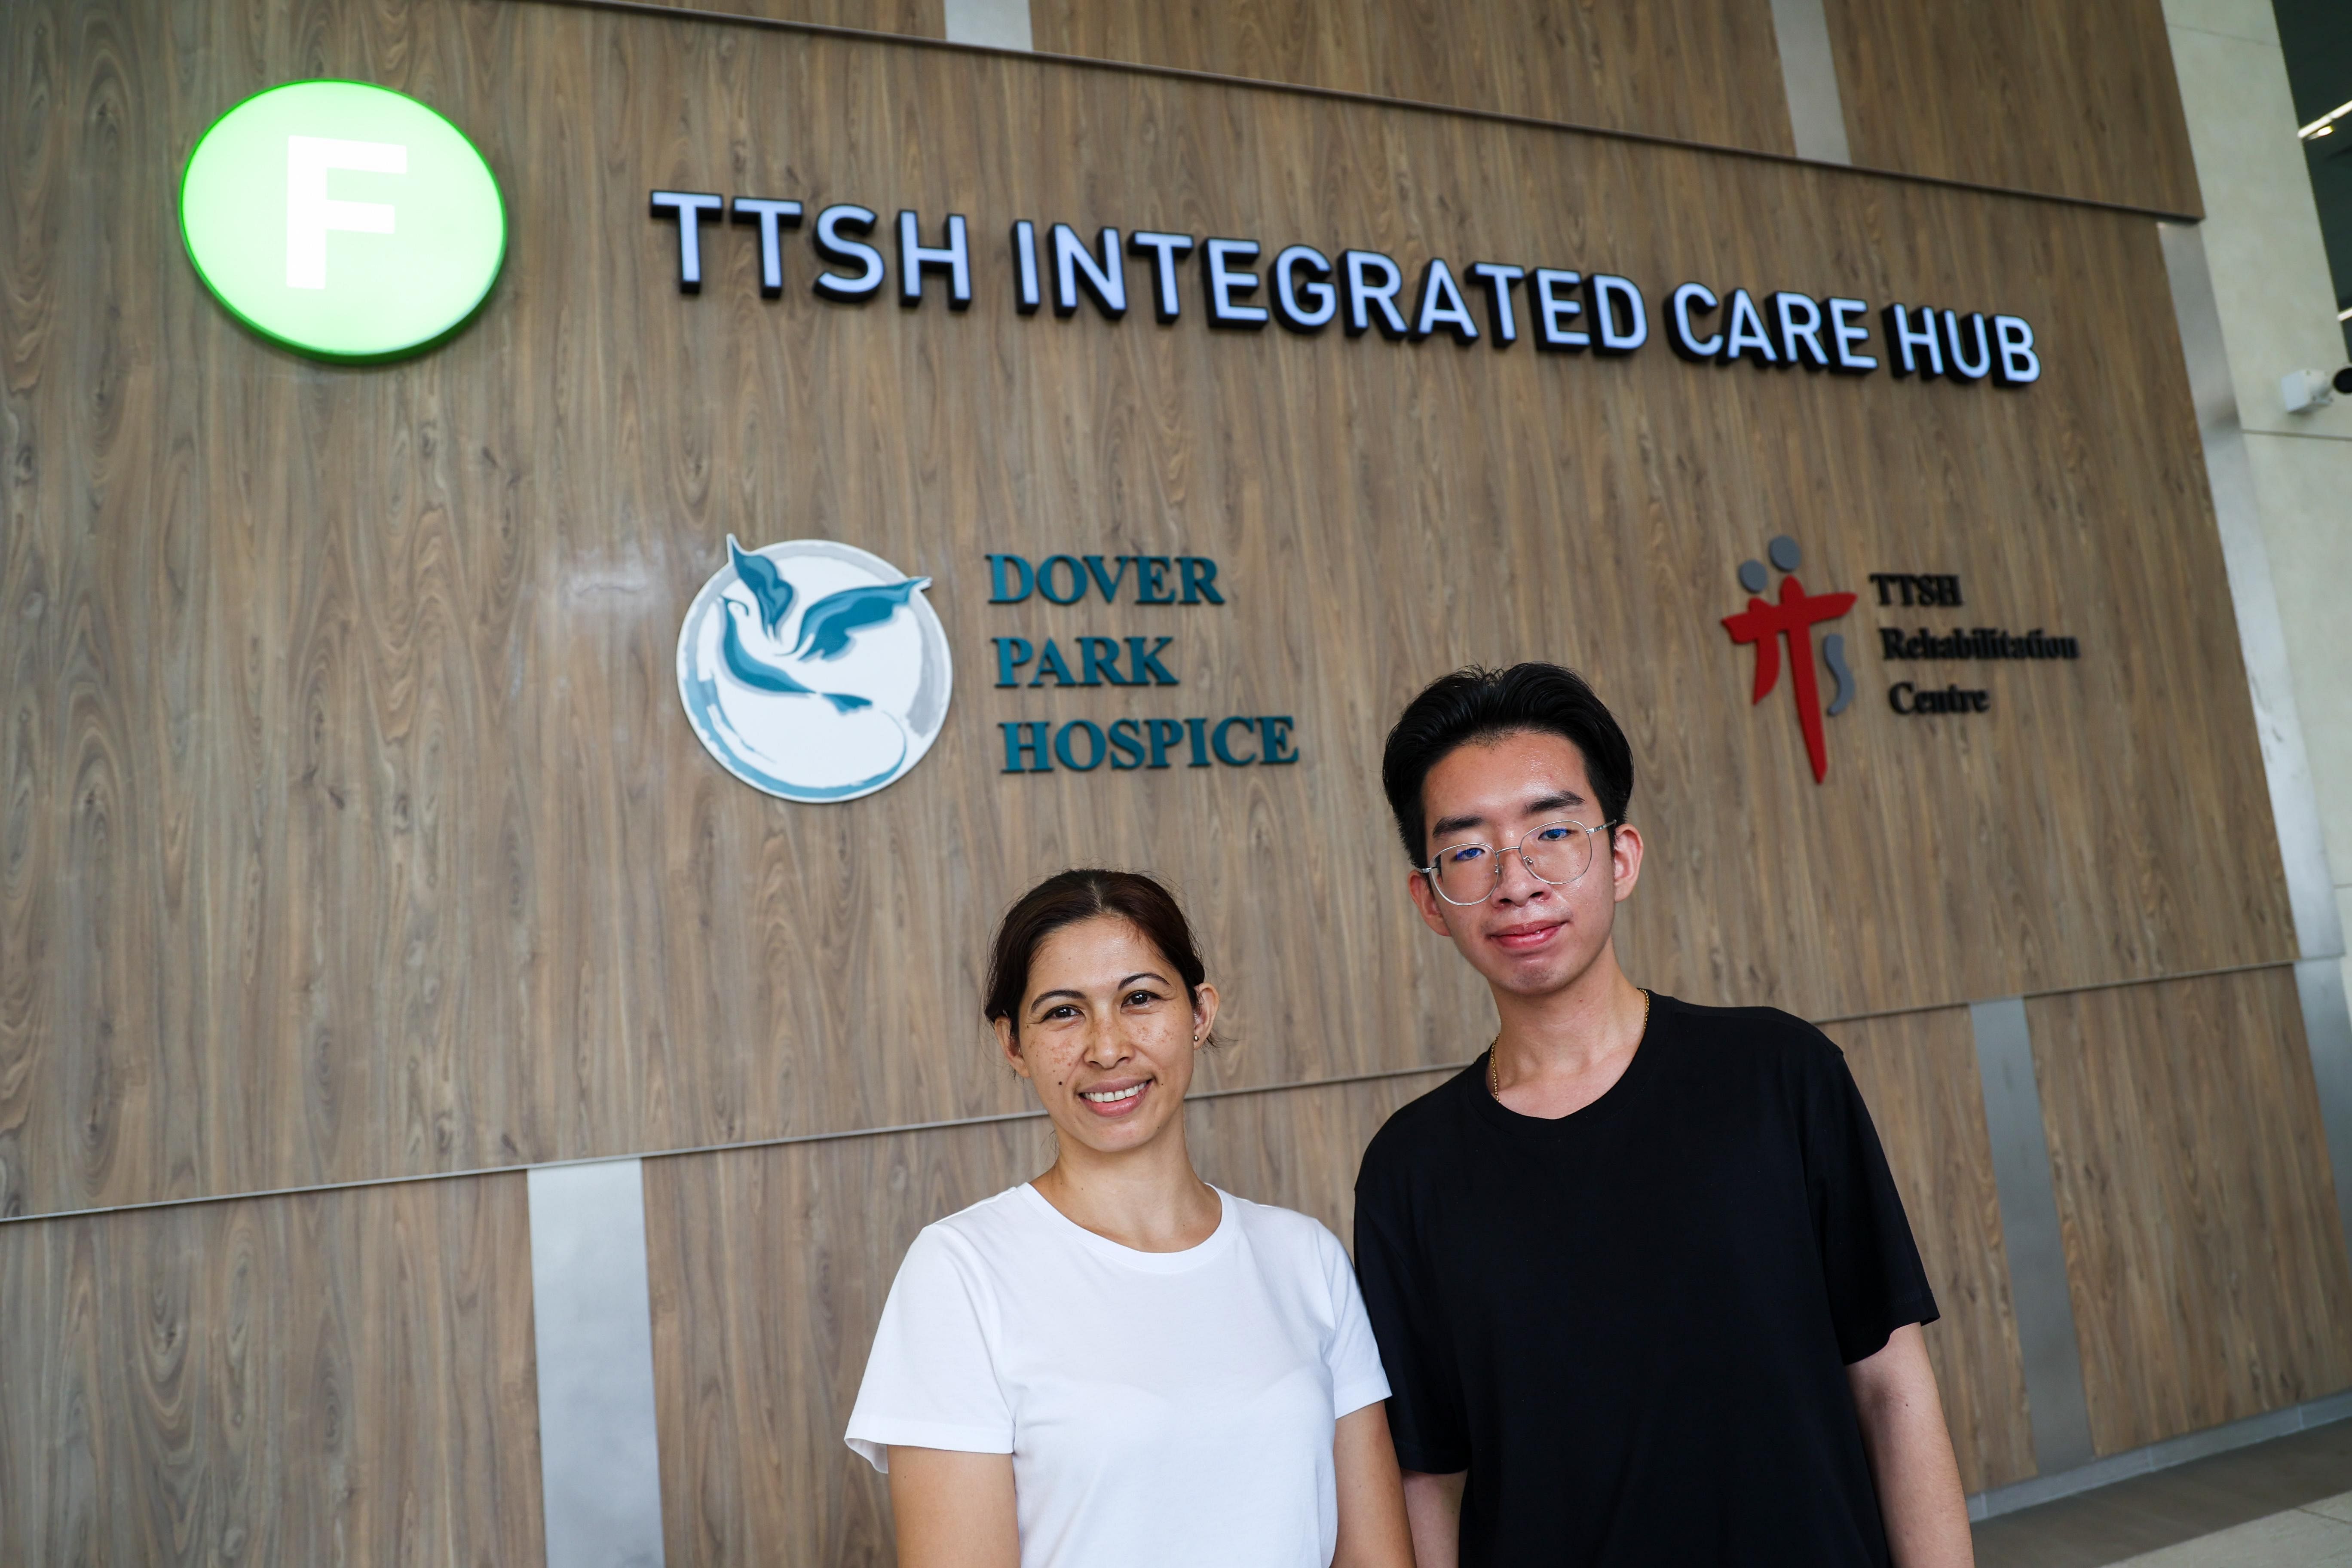 More para-nursing volunteers helping to boost patient care, lighten nurses’ workload at TTSH